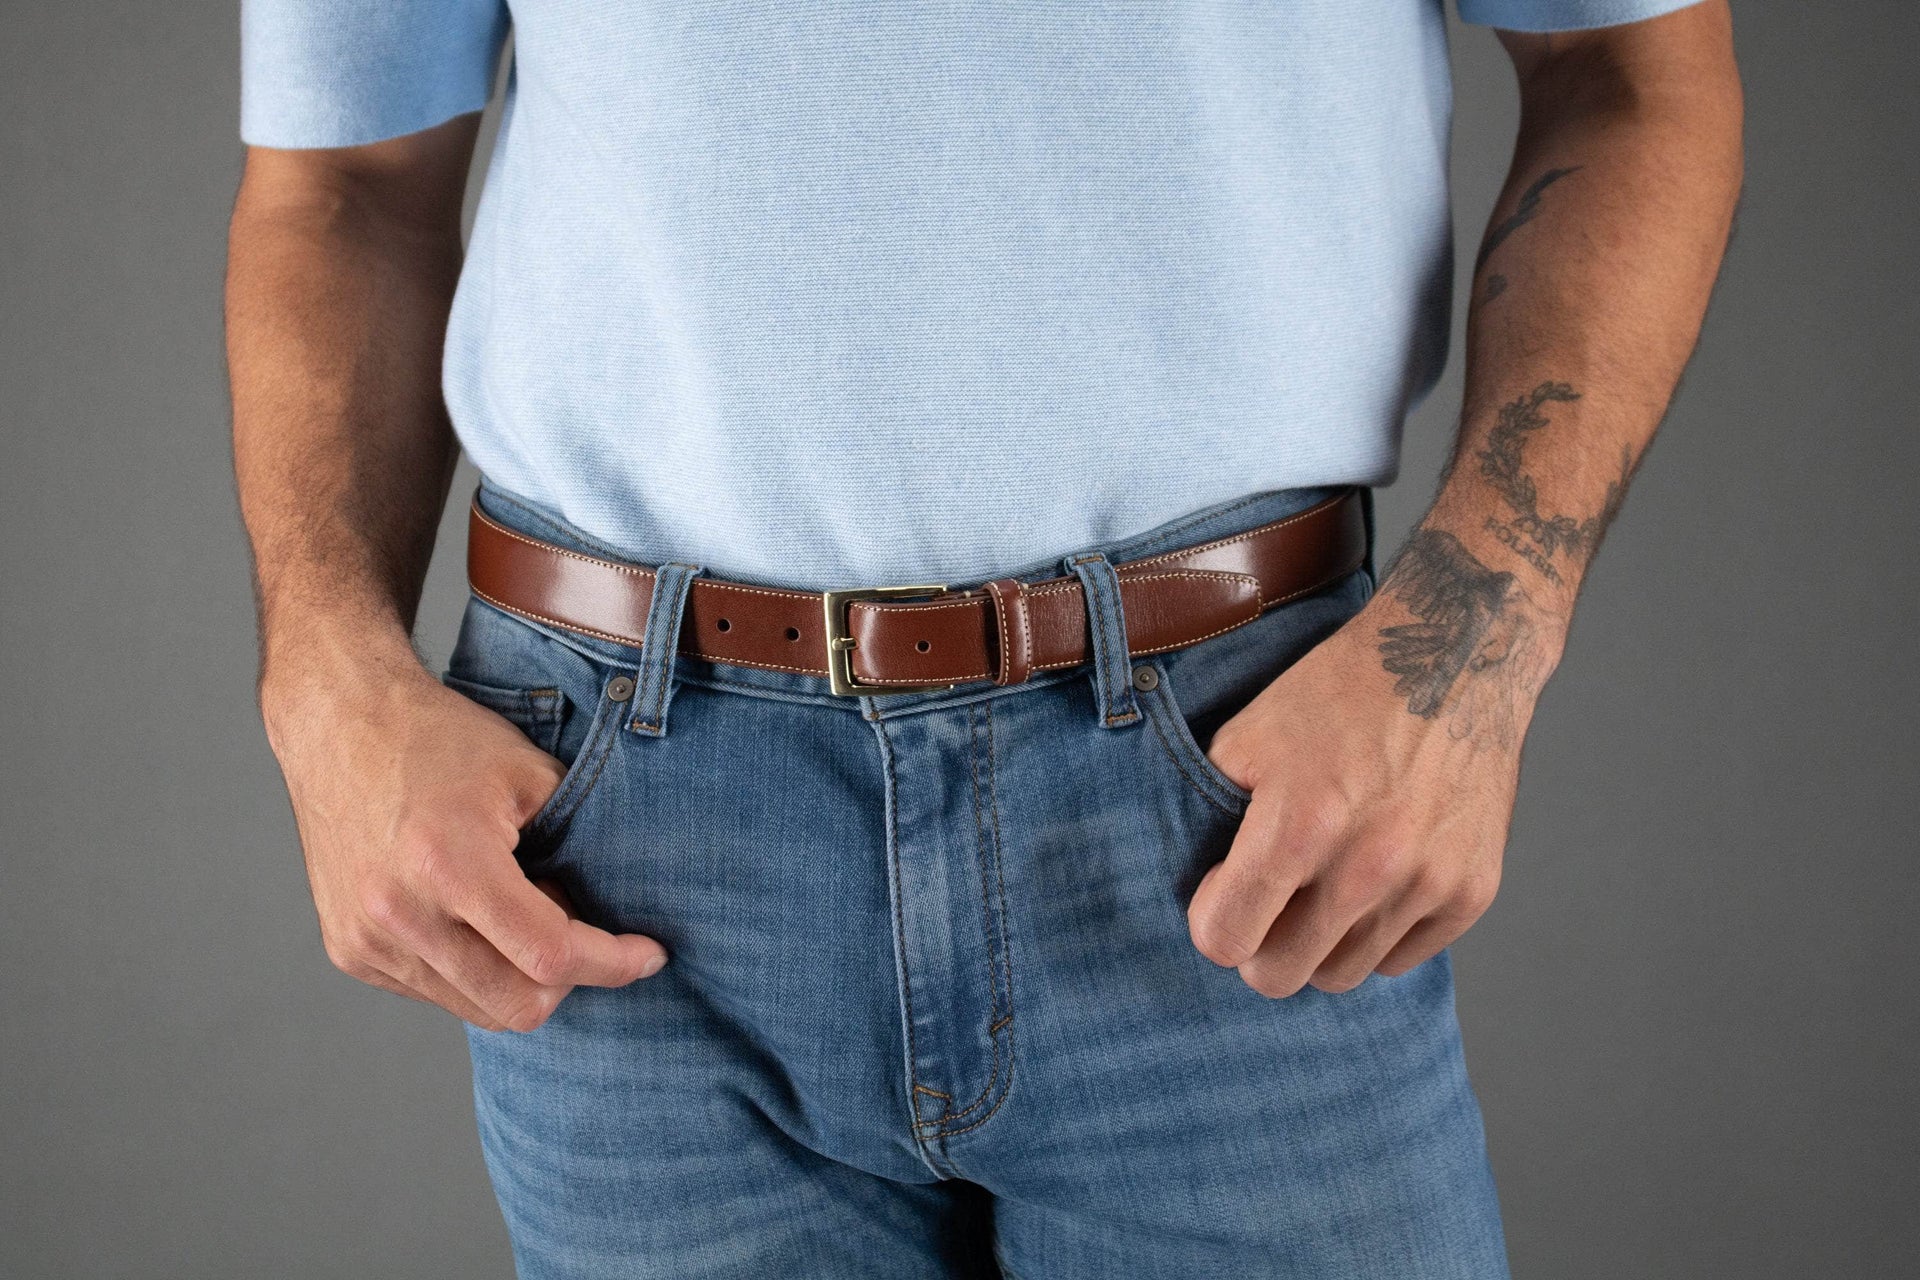  YIRASUO Full Grain Leather Belts for Men,Italian Solid Leather  Belts Men, Men's Genuine Leather Belts, Casual Jeans Men Belts (Belt Size  30 (Fits Waist 28-30), Brown) : Clothing, Shoes & Jewelry